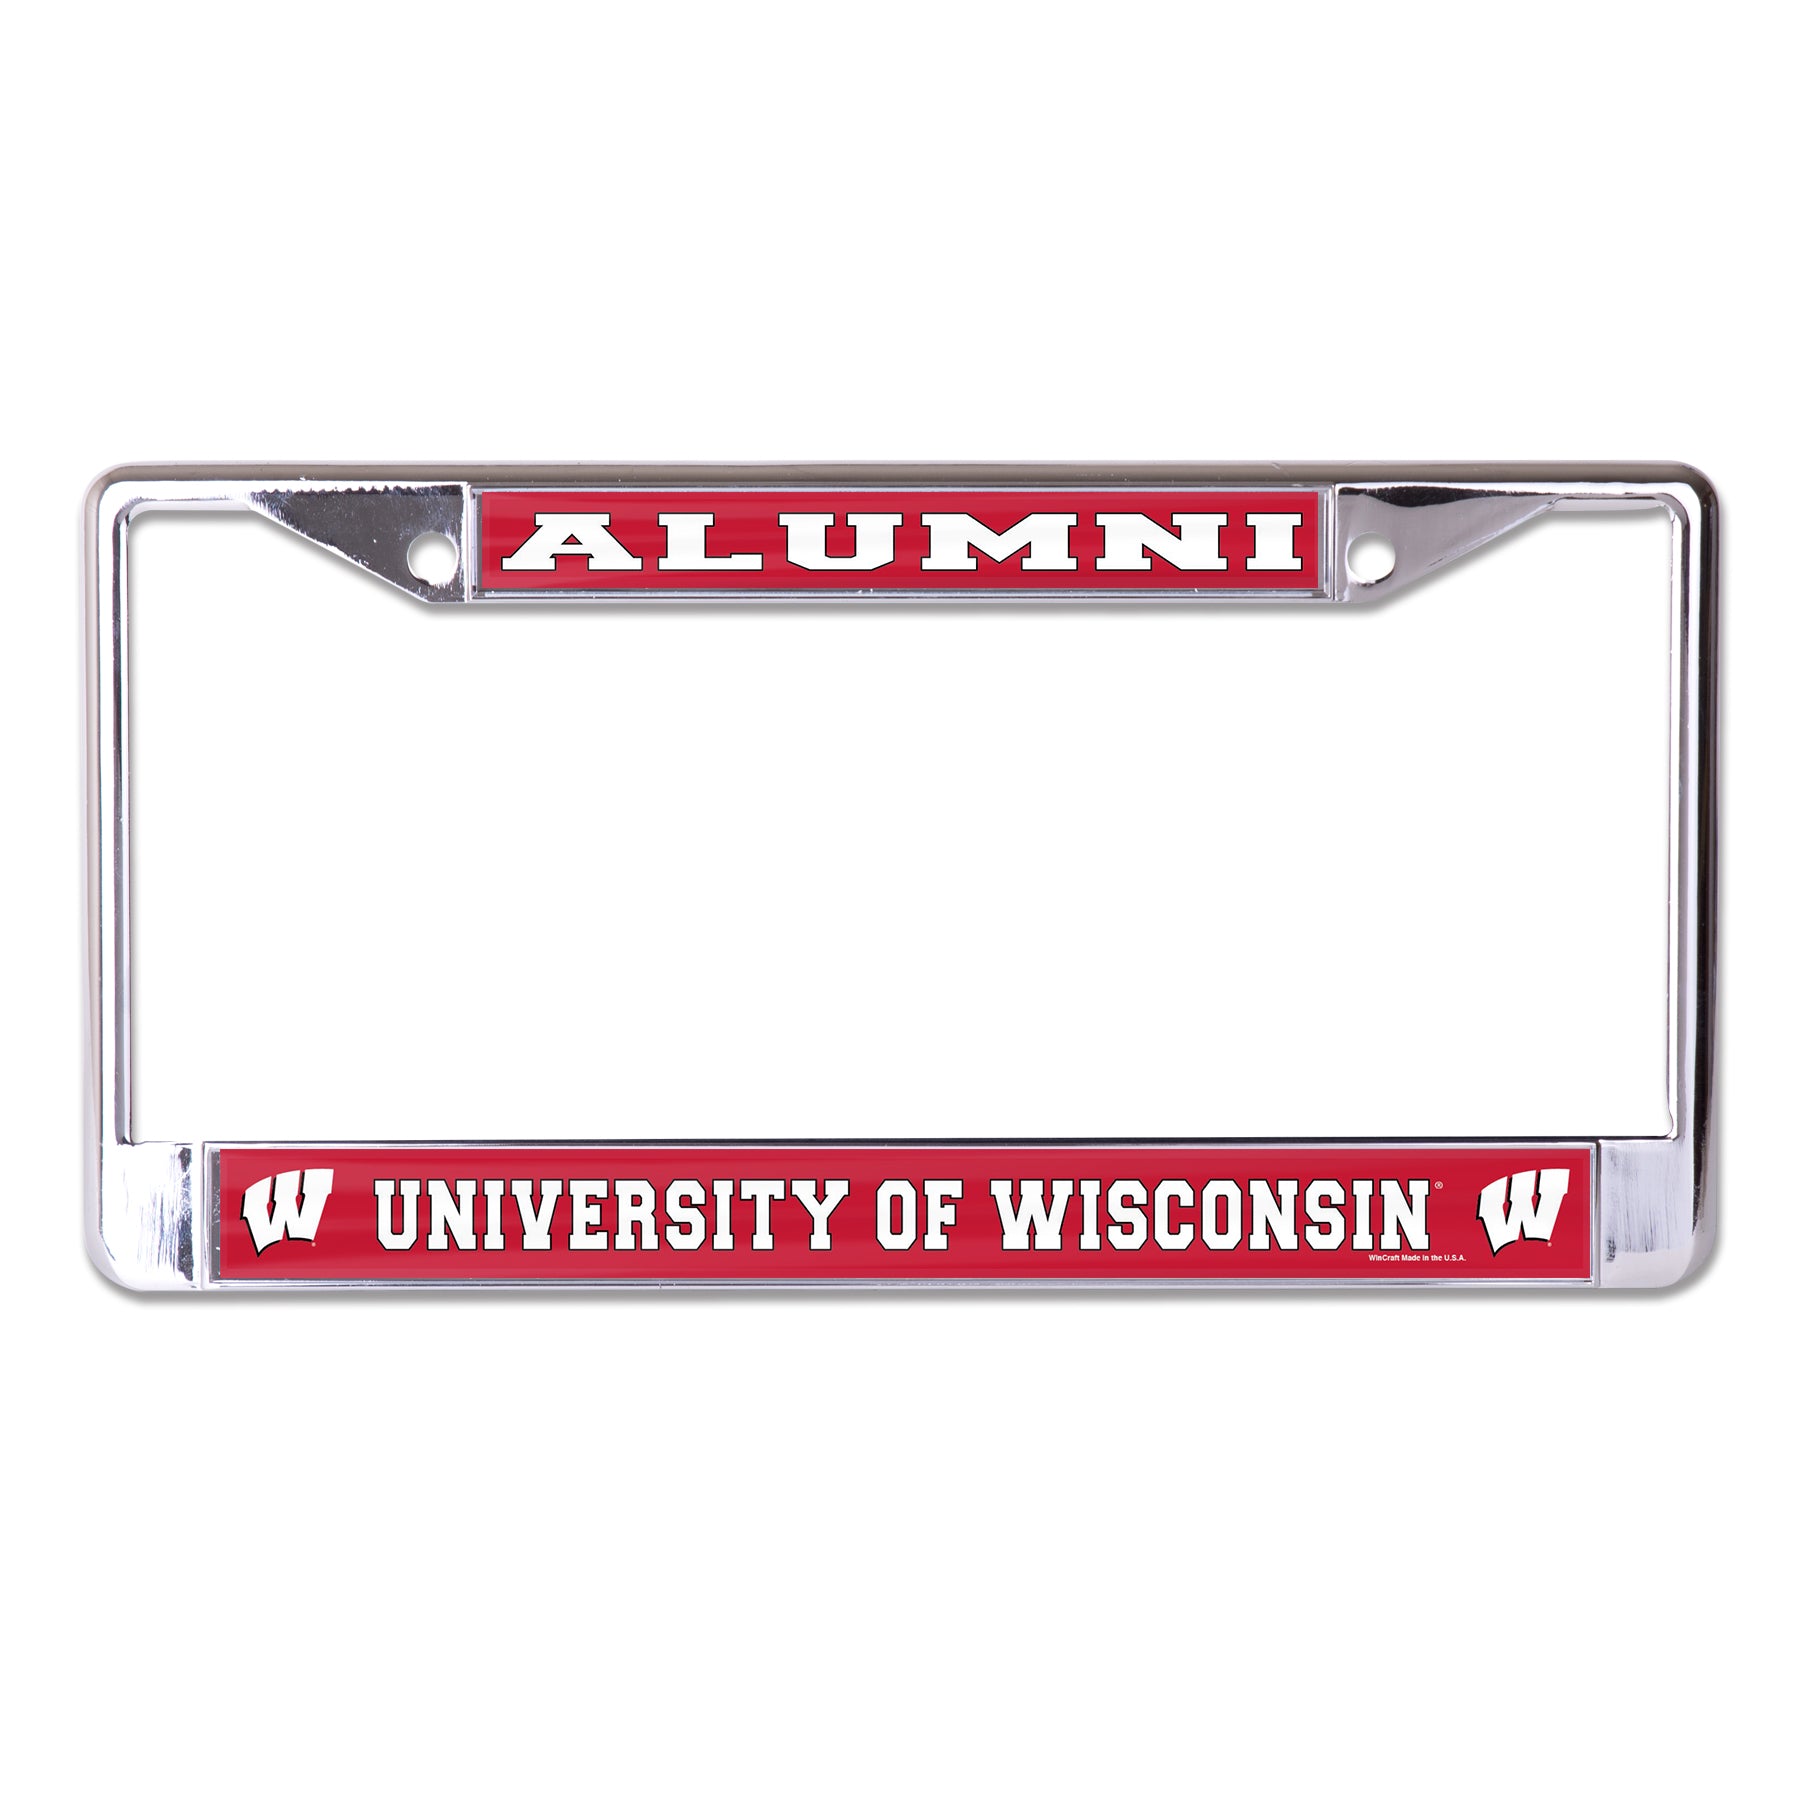 University of Wisconsin Alumni License Plate Frame